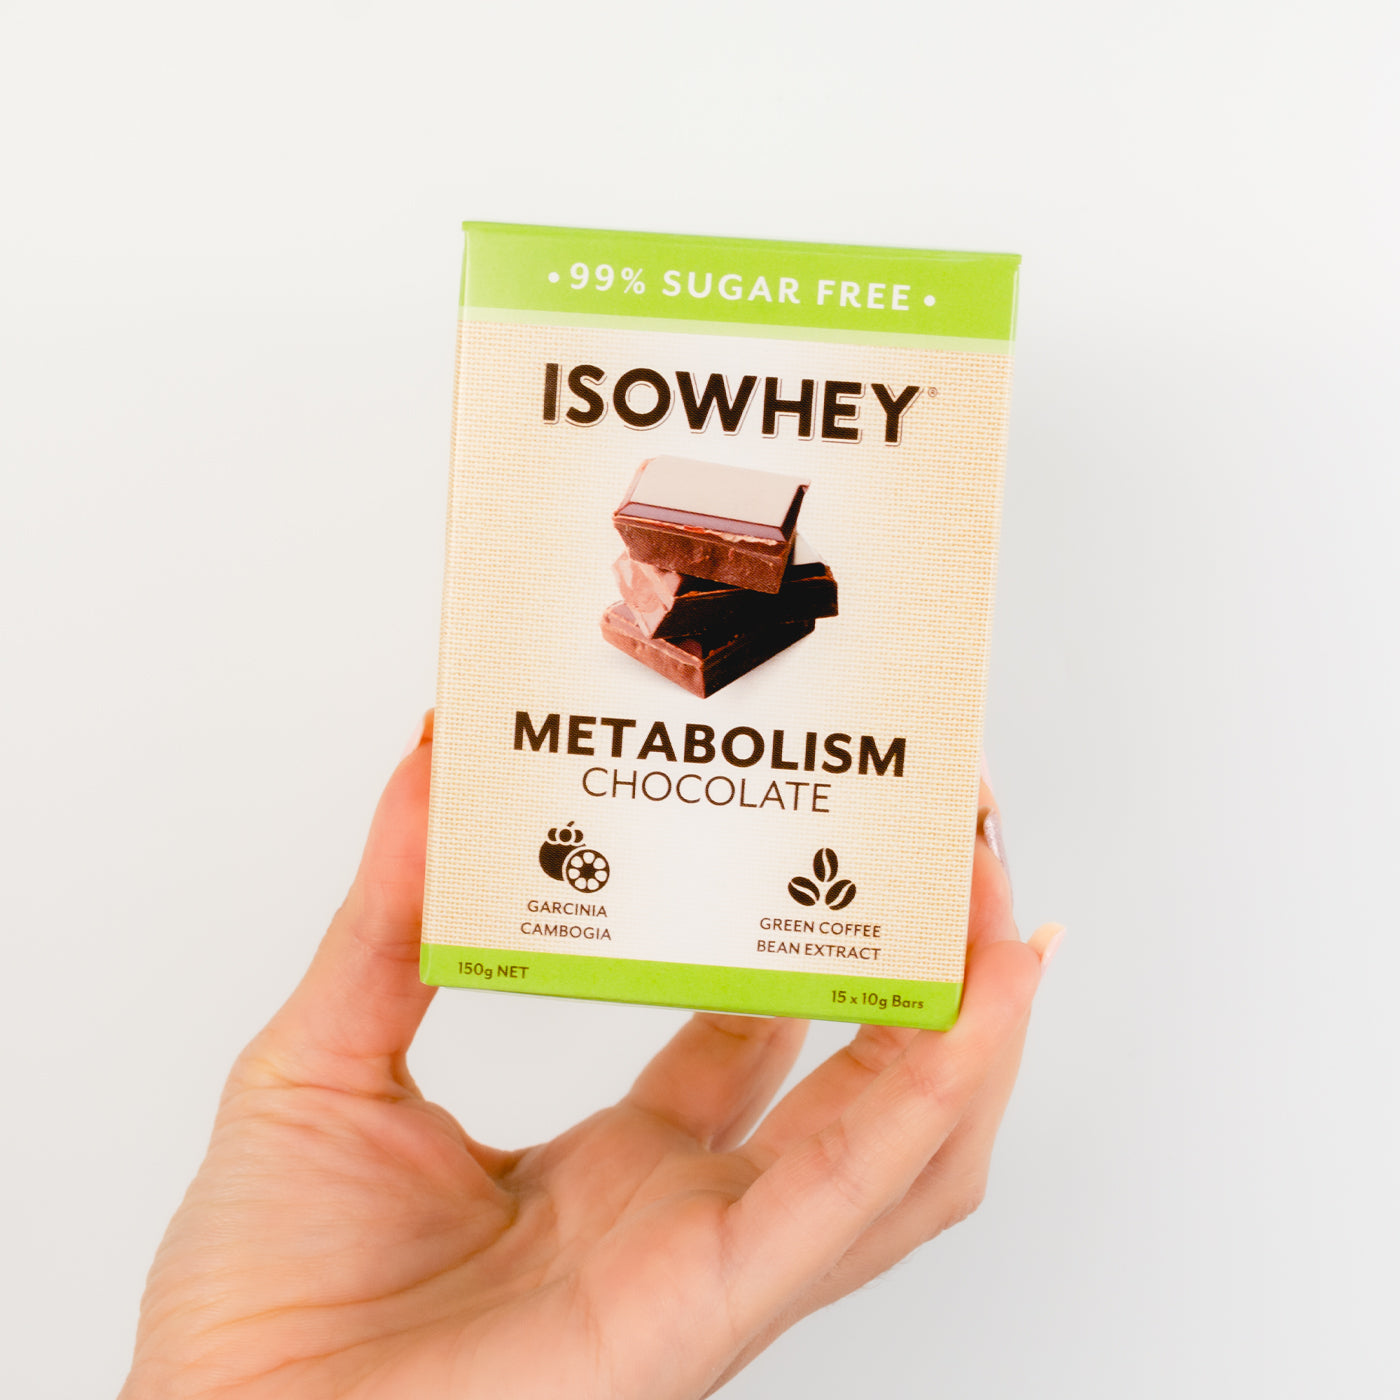 IsoWhey Metabolism Chocolate 15x10g